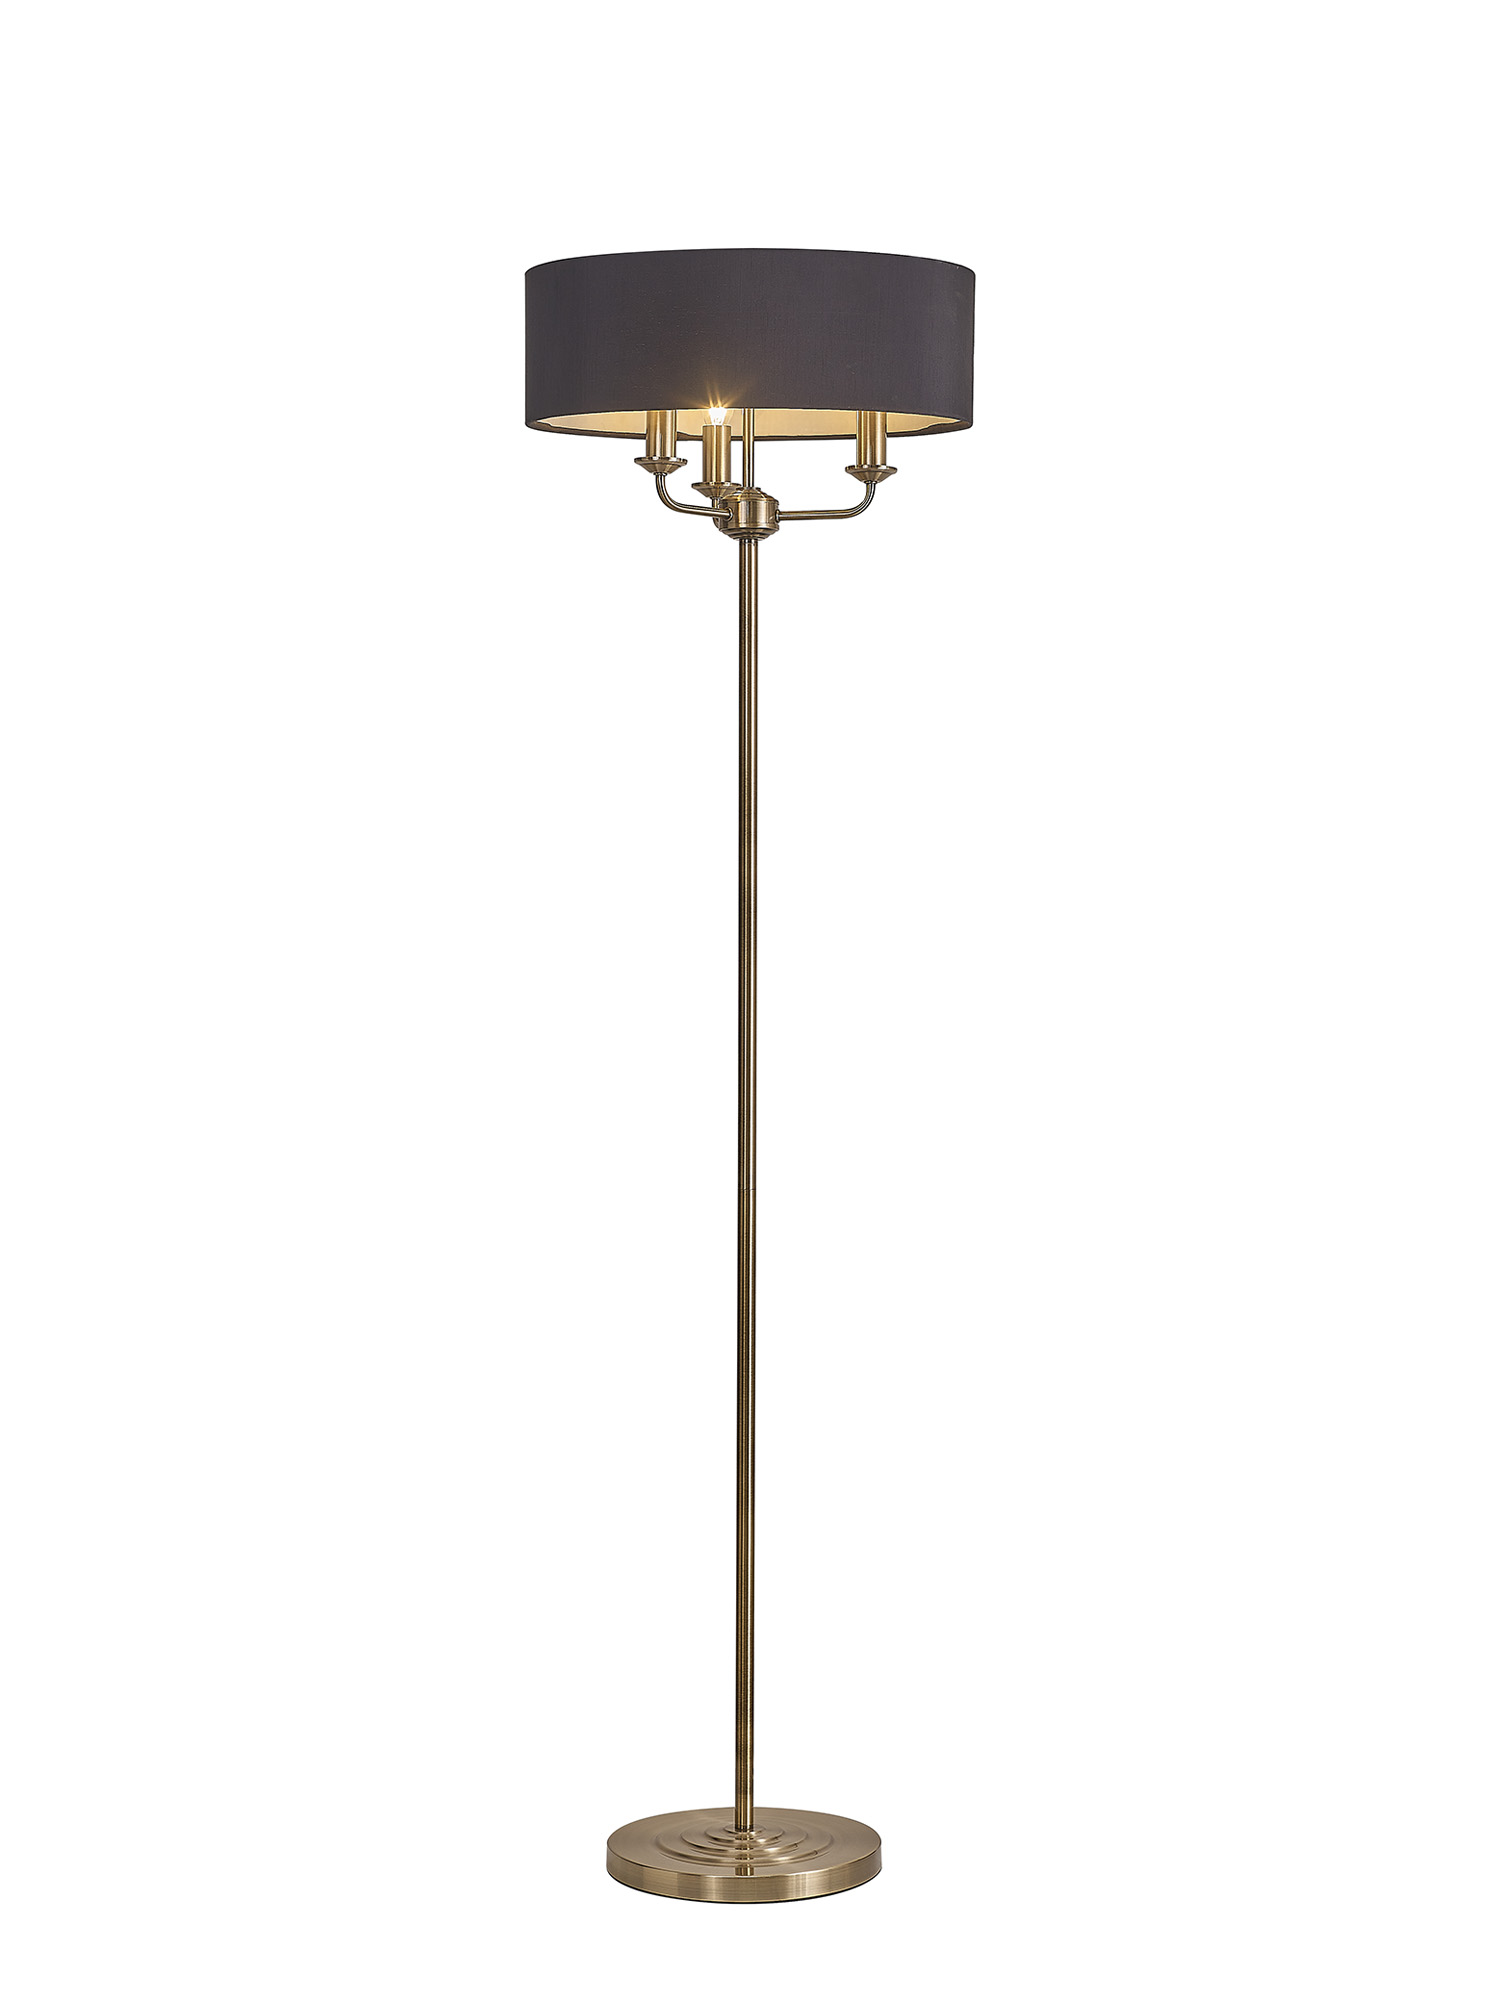 DK0903  Banyan 45cm 3 Light Floor Lamp Antique Brass, Black